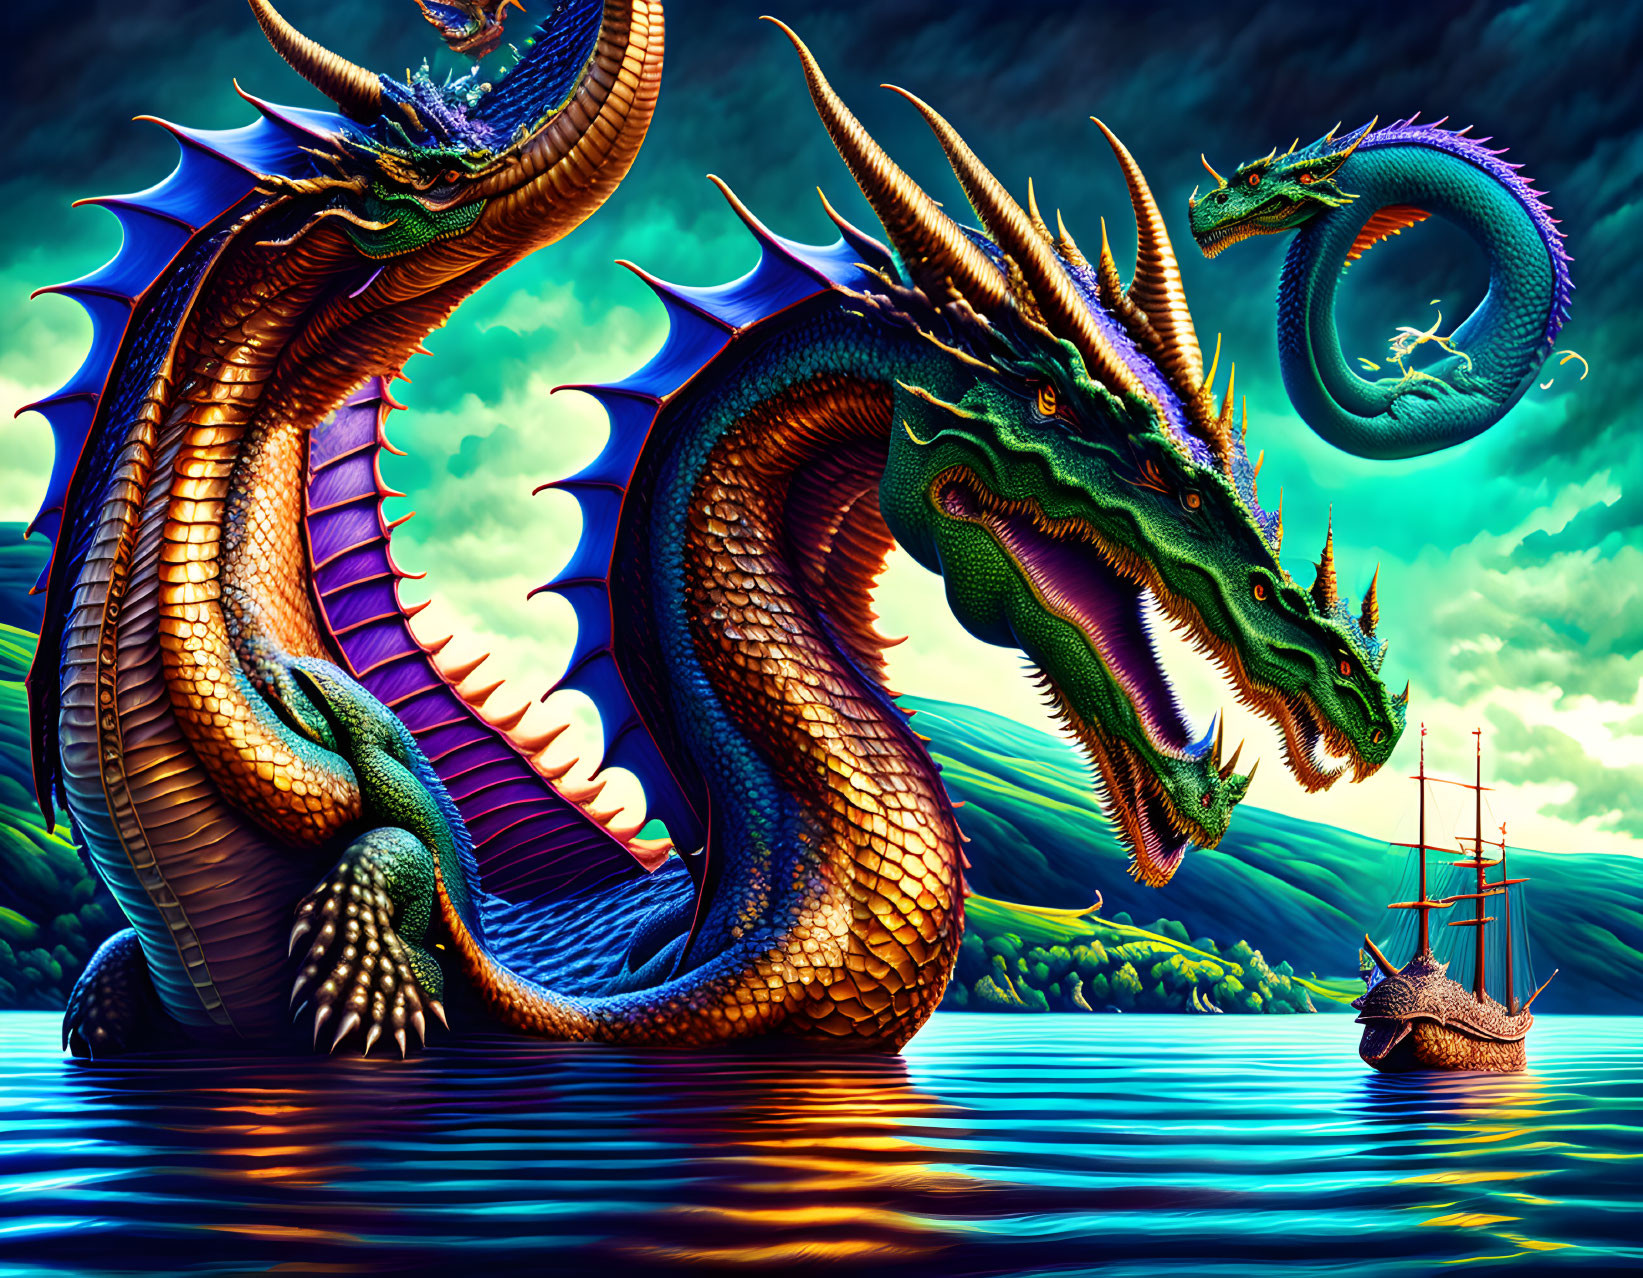 Multi-headed dragon emerges from sea near sailing ship under dramatic sky.